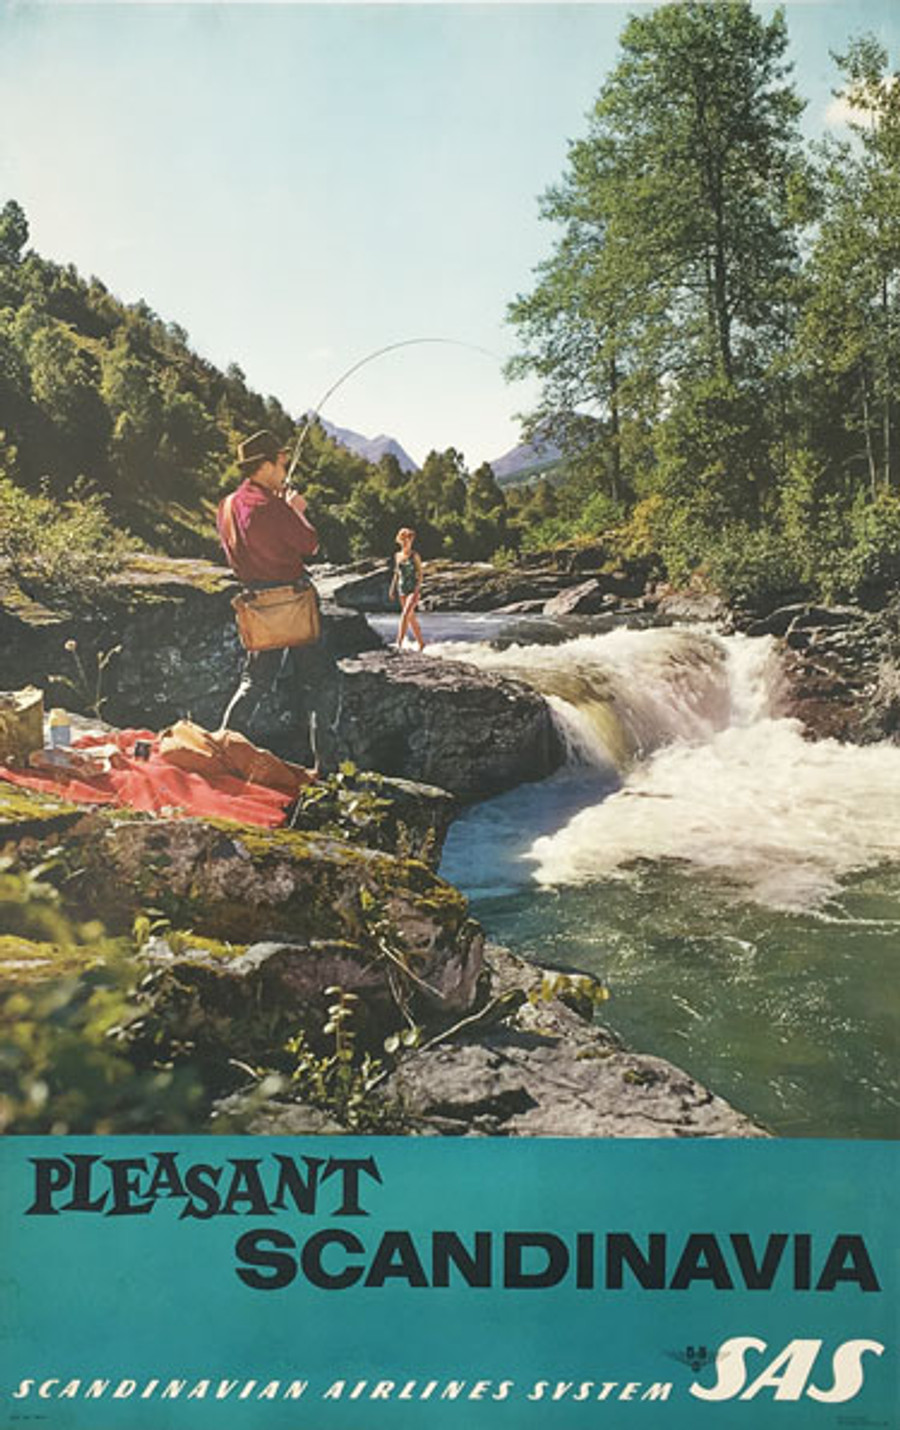 Pleasant Scandinavia SAS original vintage travel poster depicts couple fishing in Swedish countryside